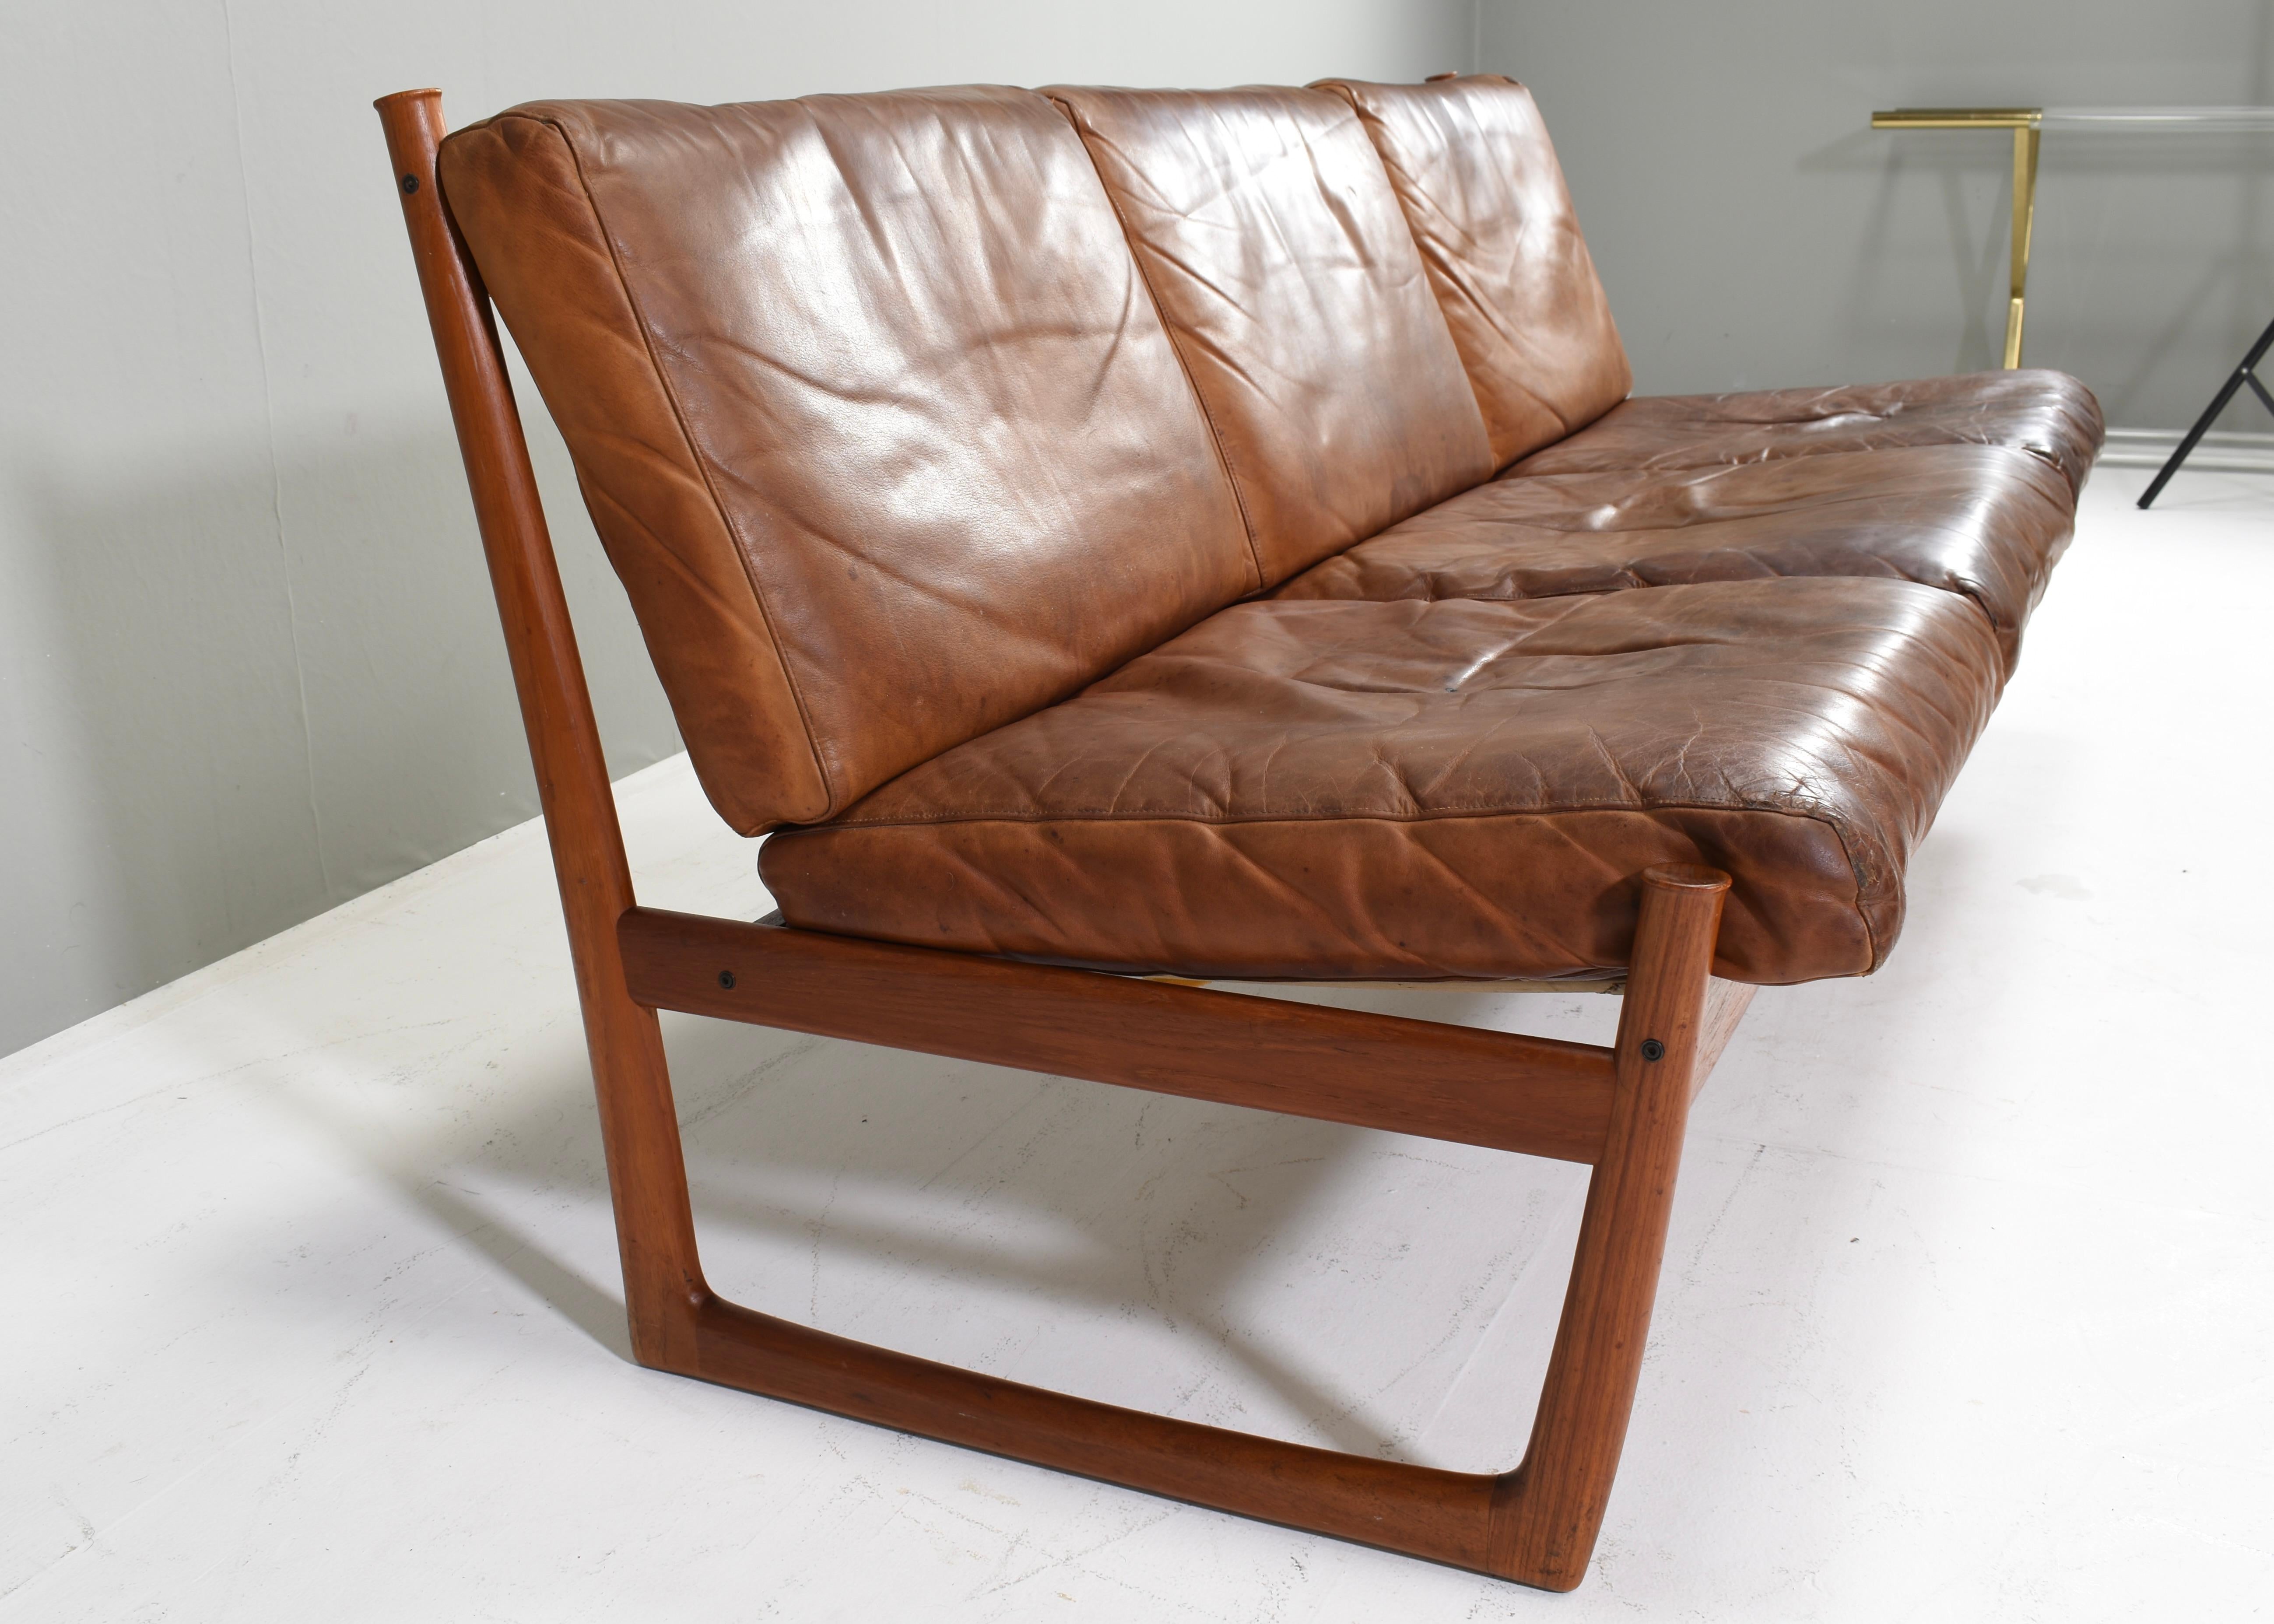 Peter Hvidt & Orla Mølgaard FD130 Teak sofa in Cognac Leather - Denmark, 1950's For Sale 4